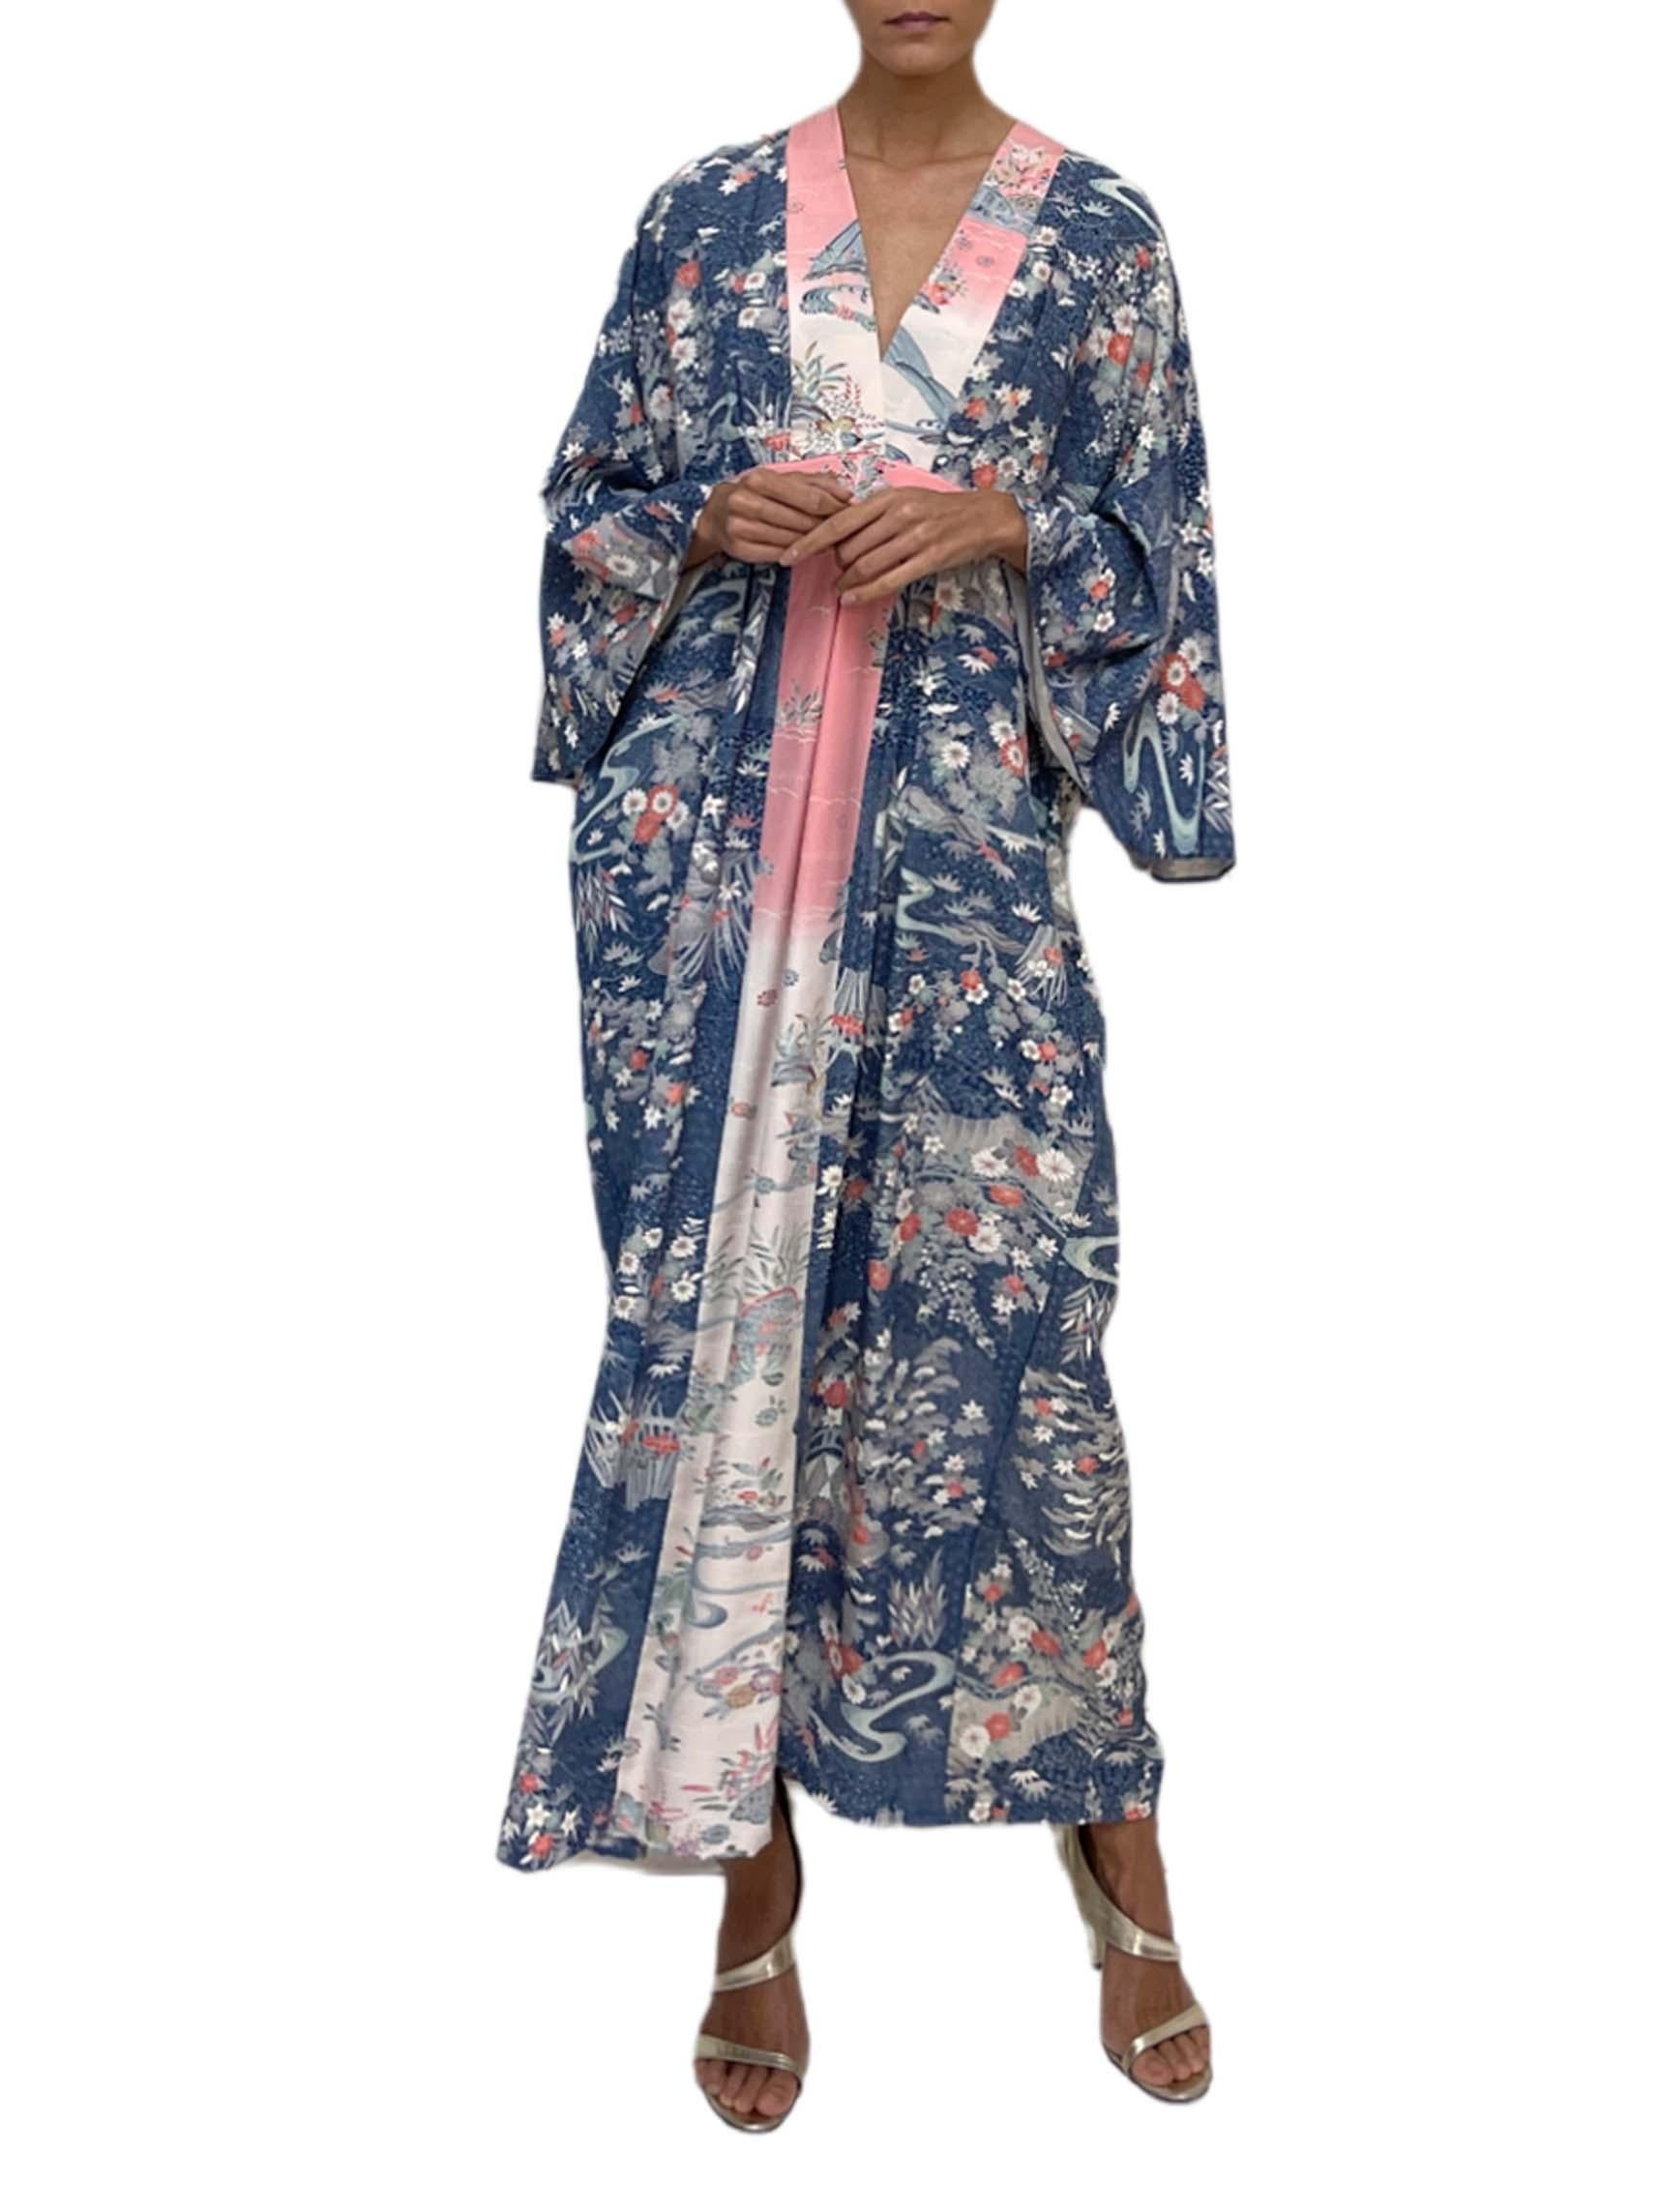 Women's MORPHEW COLLECTION Navy Blue, White & Pink Floral Japanese Kimono Silk Kaftan For Sale